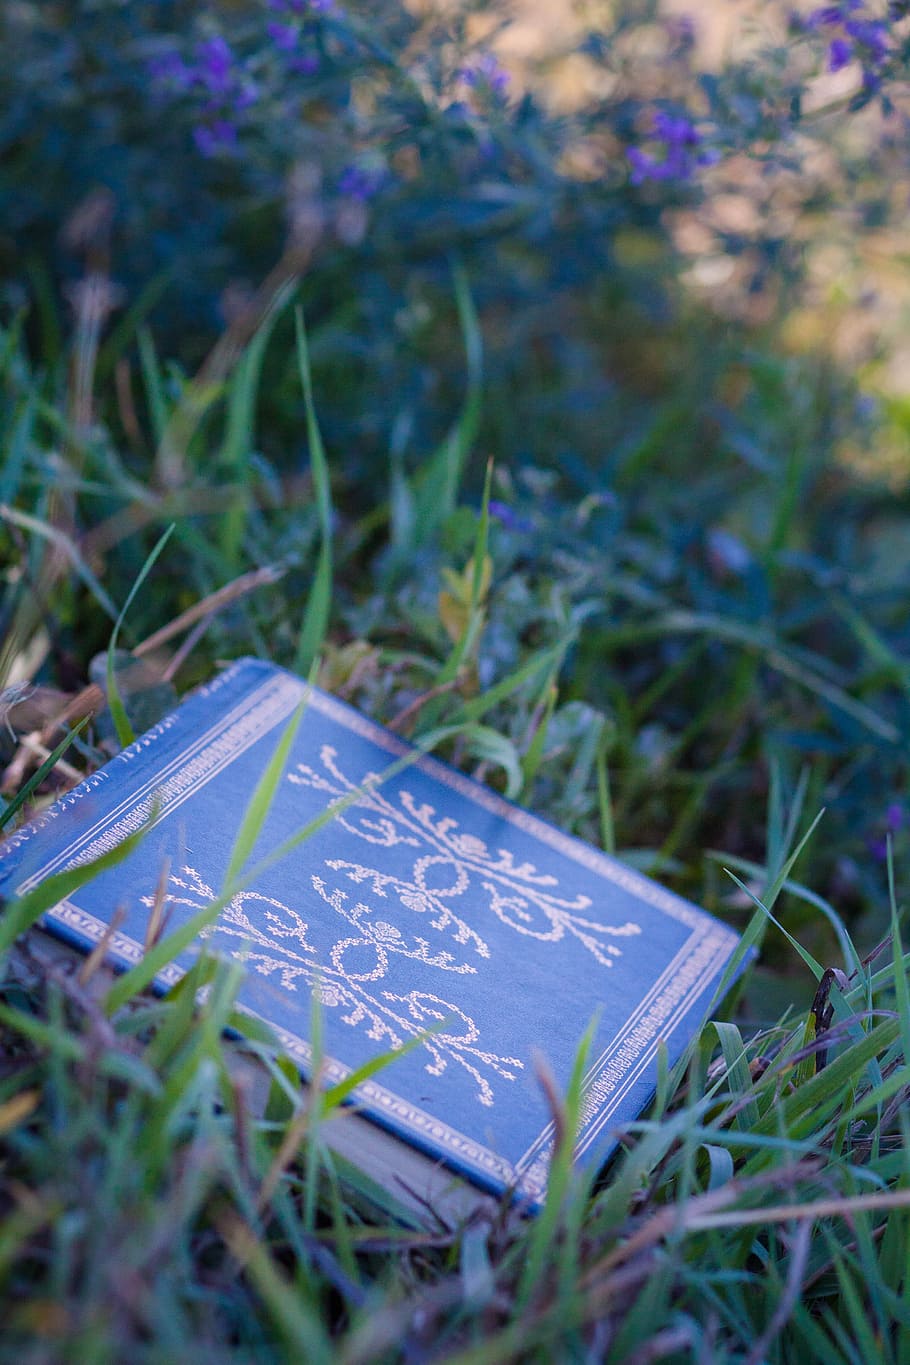 Grass, Green, Reading Book, Summer, book, grass, green, spring, reading, leisure, read